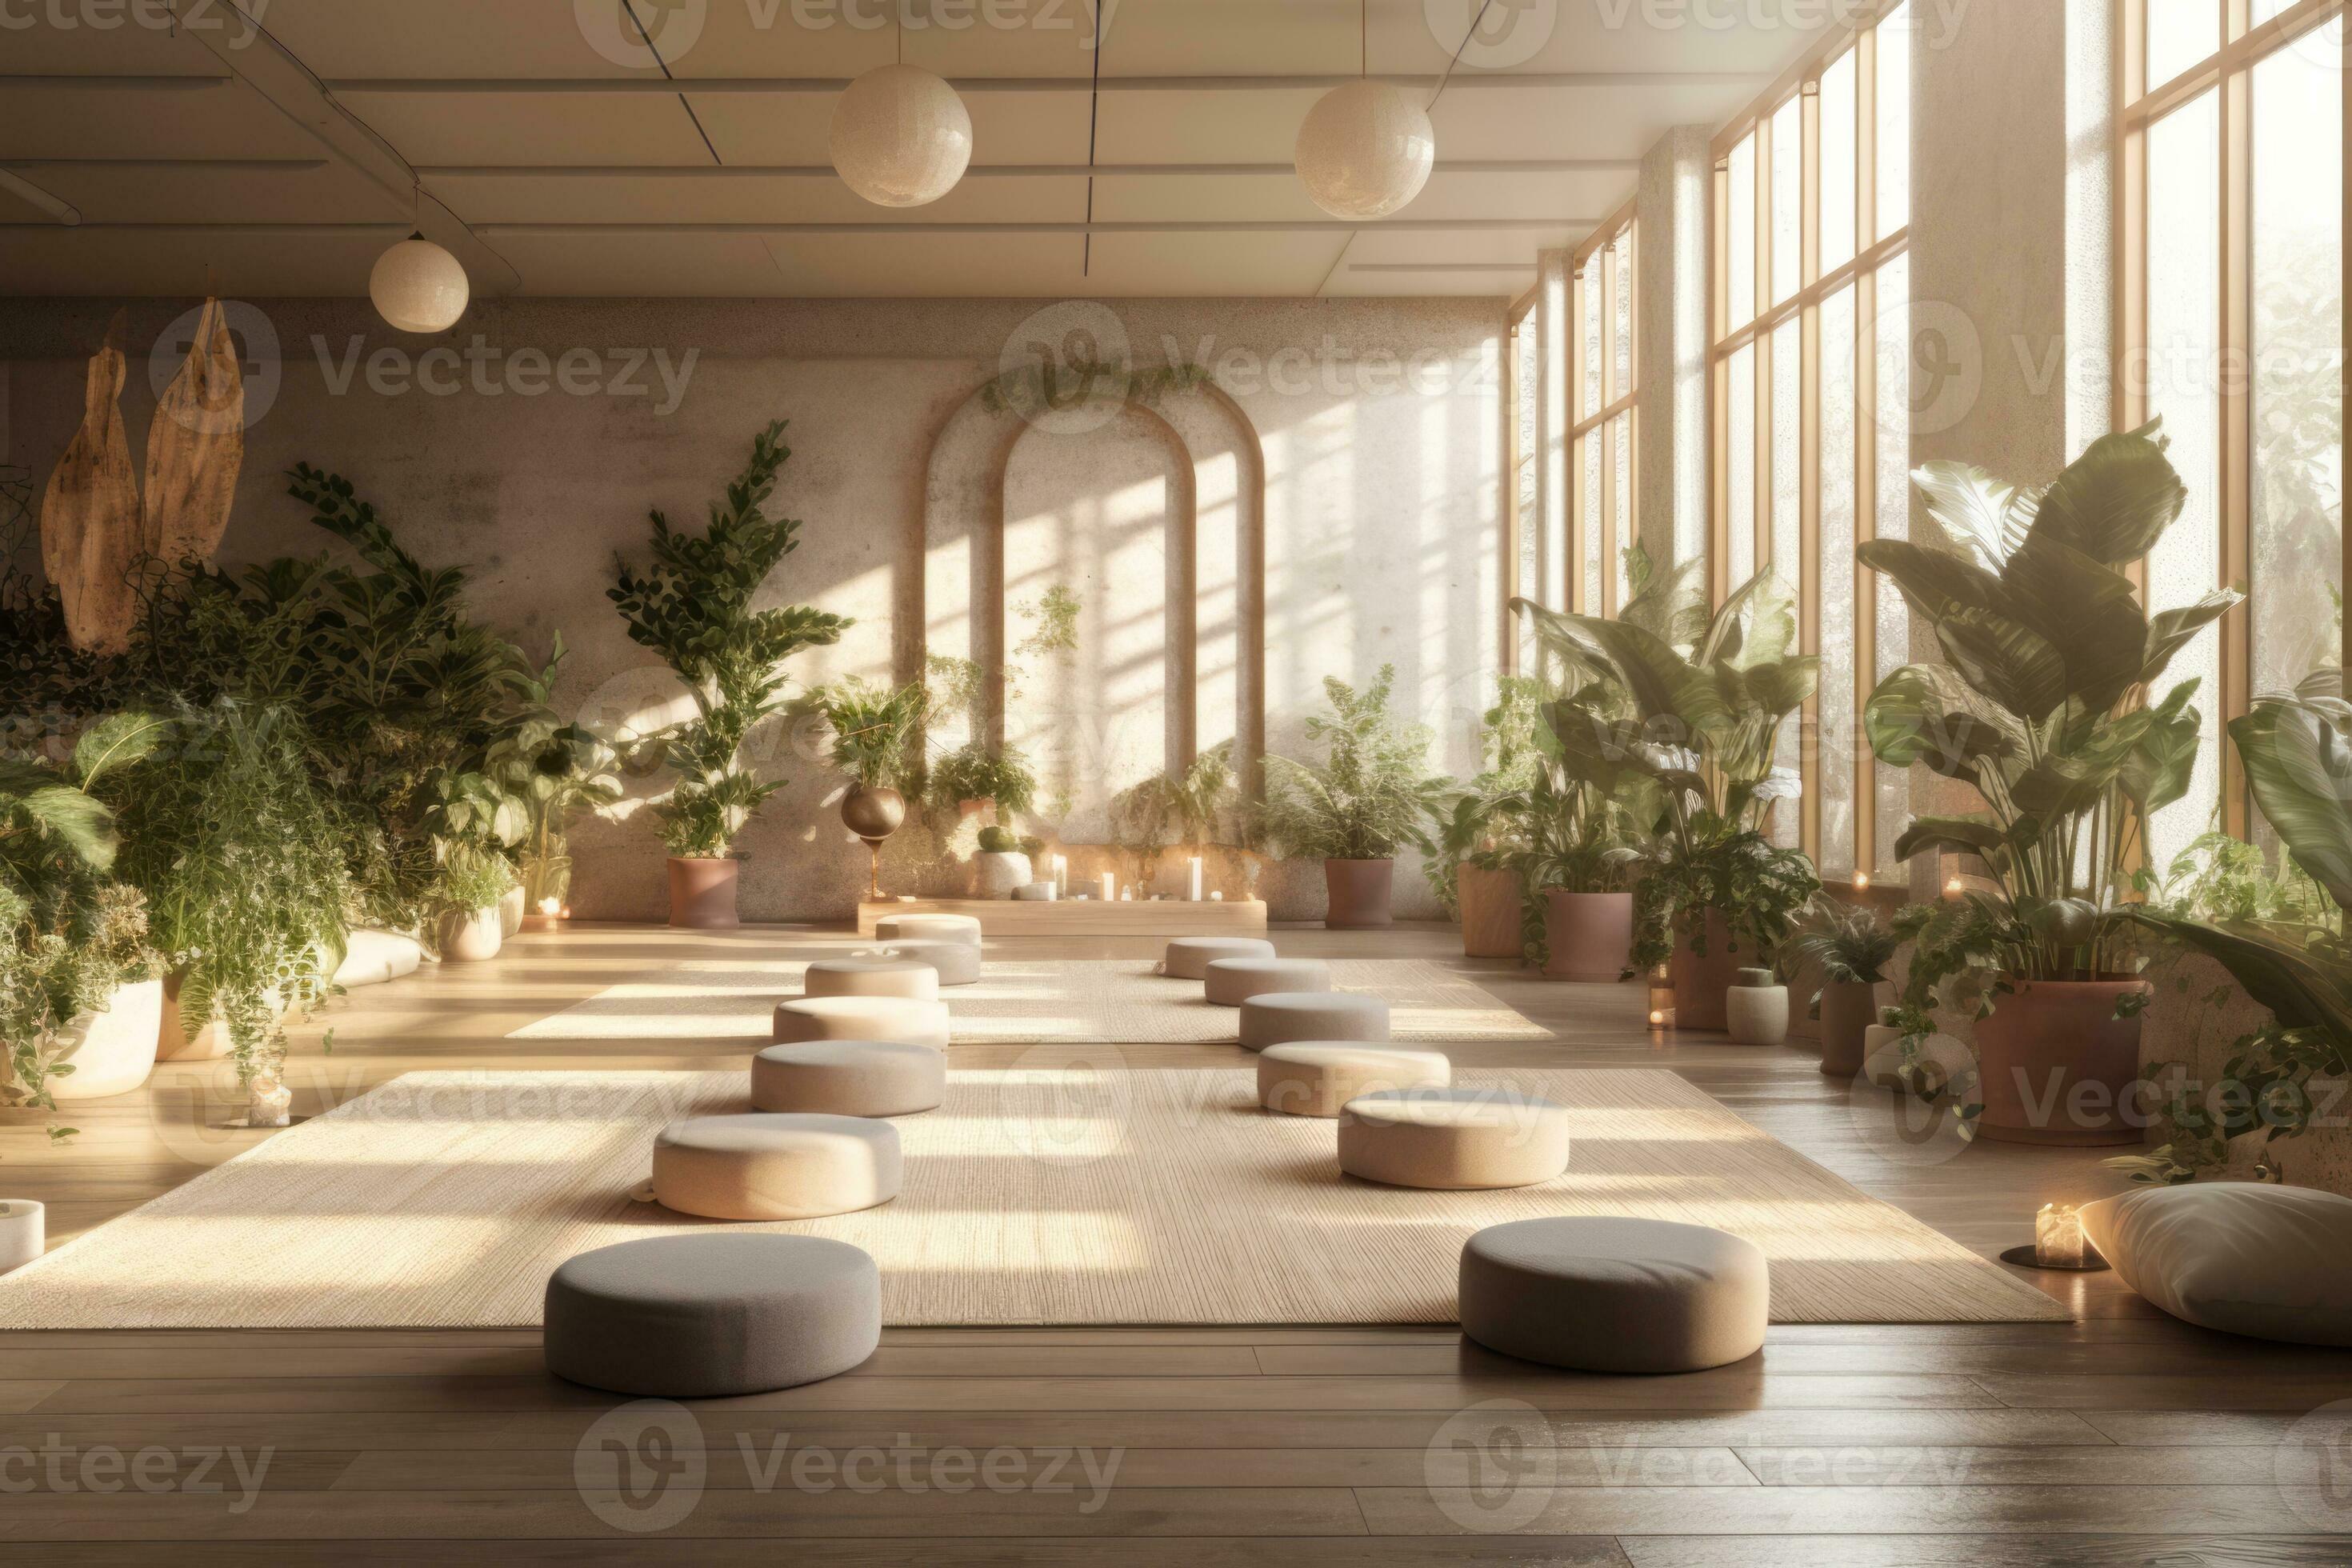 Yoga studio designed with aloe vera elements, featuring natural